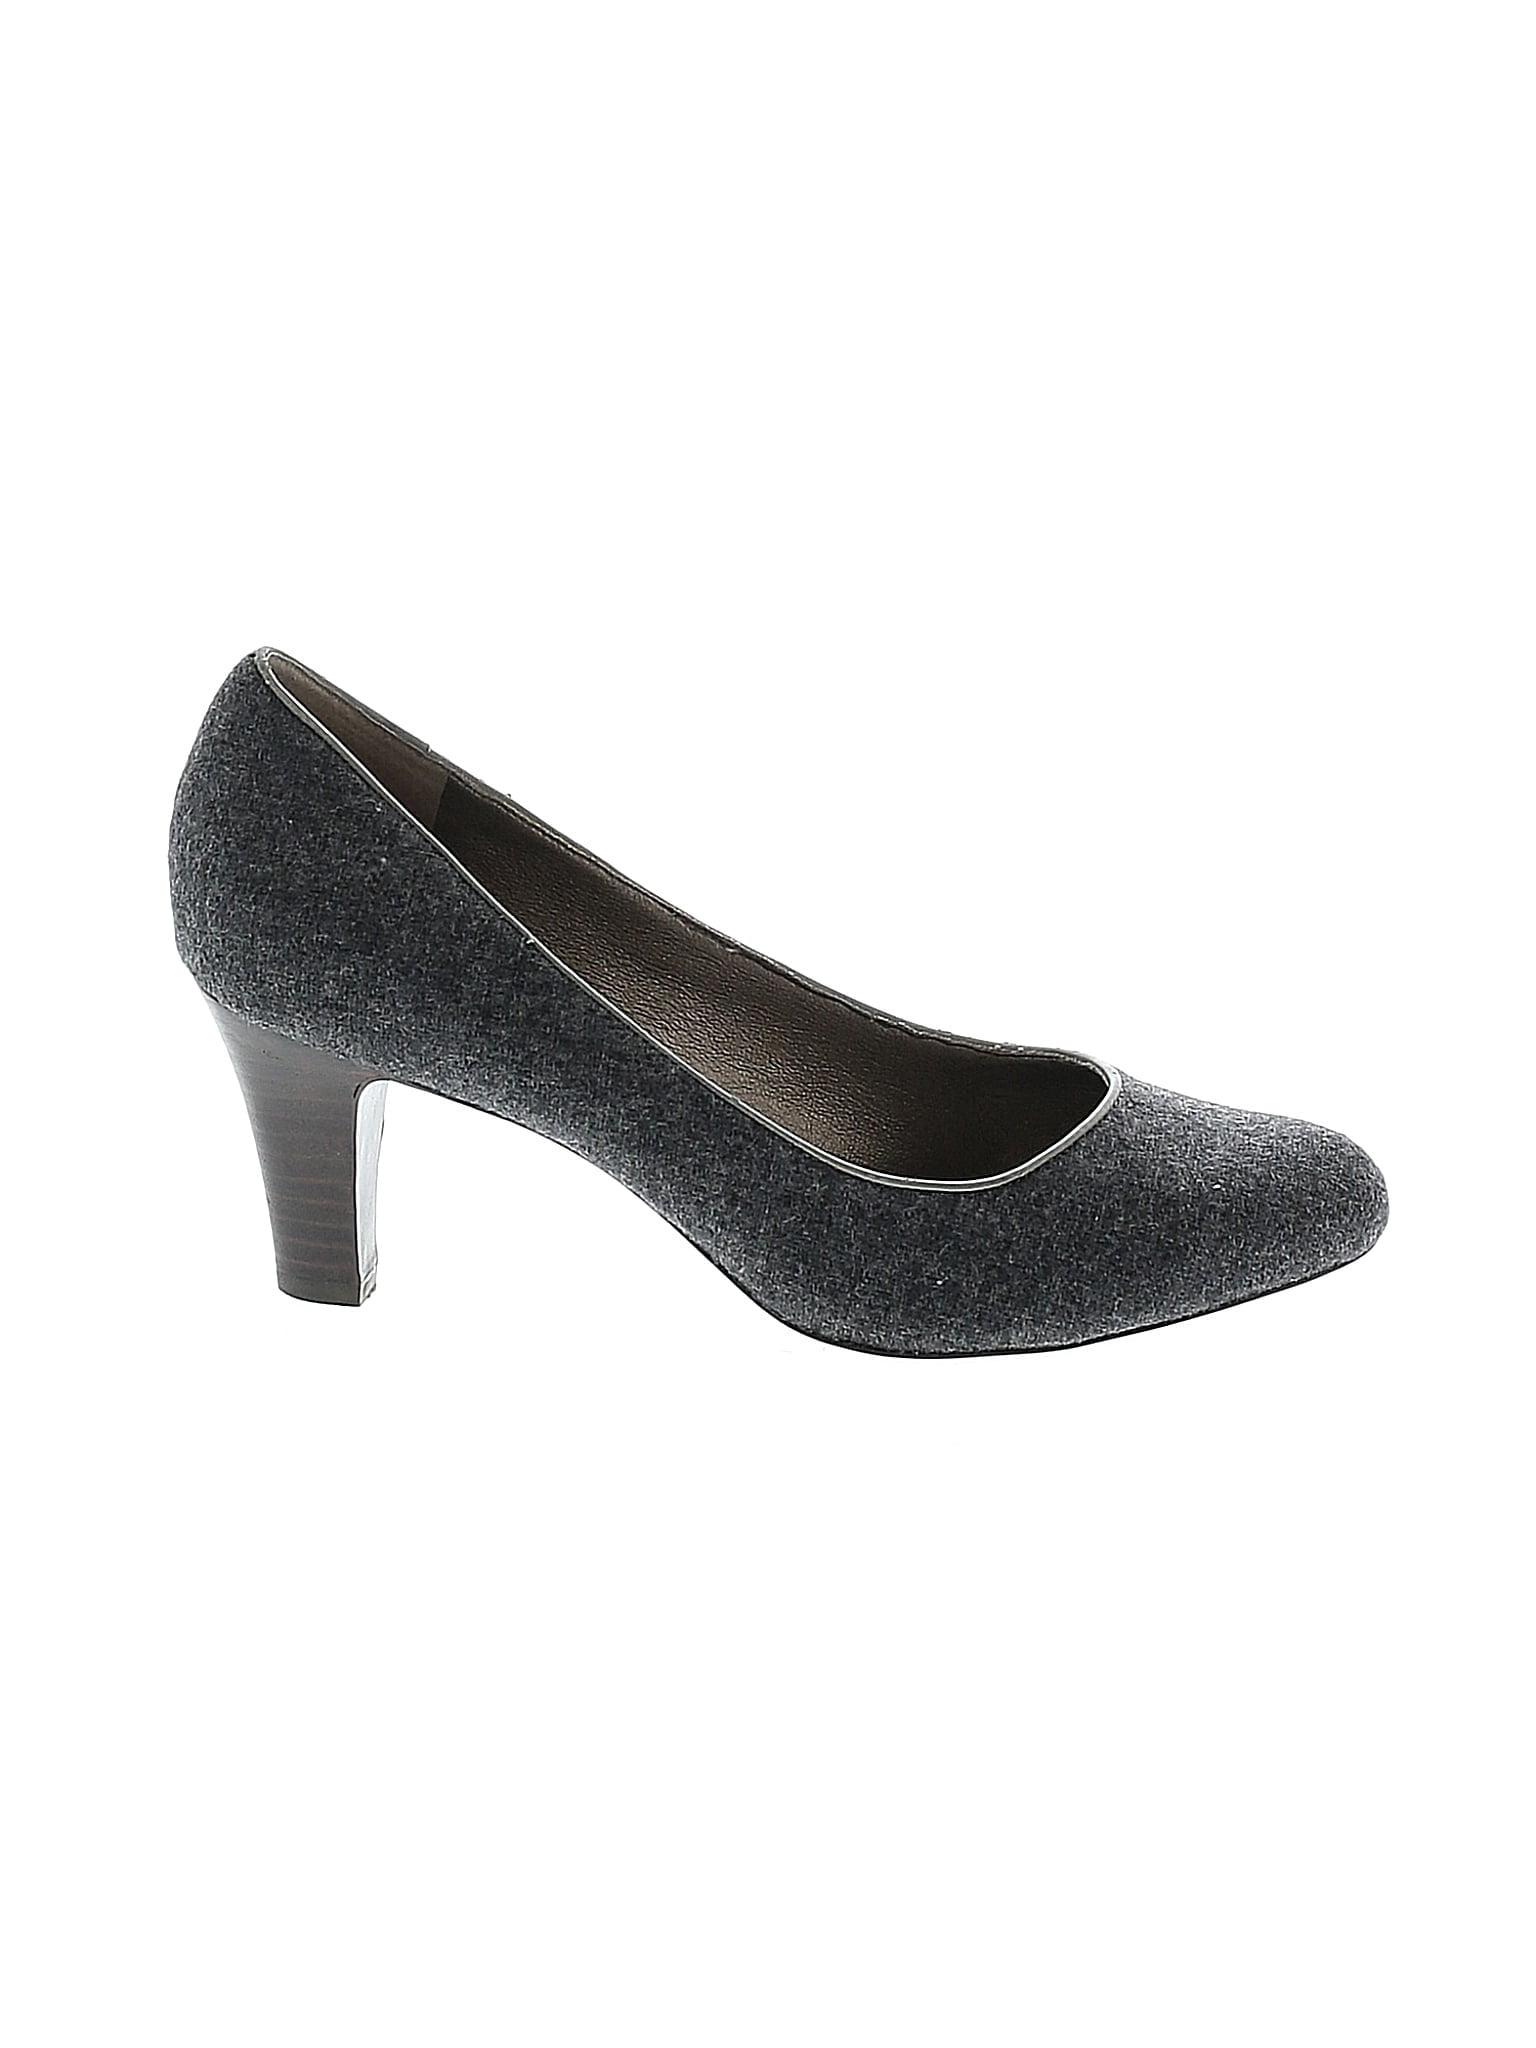 Premium Photo | Black women high heel shoes flat lay